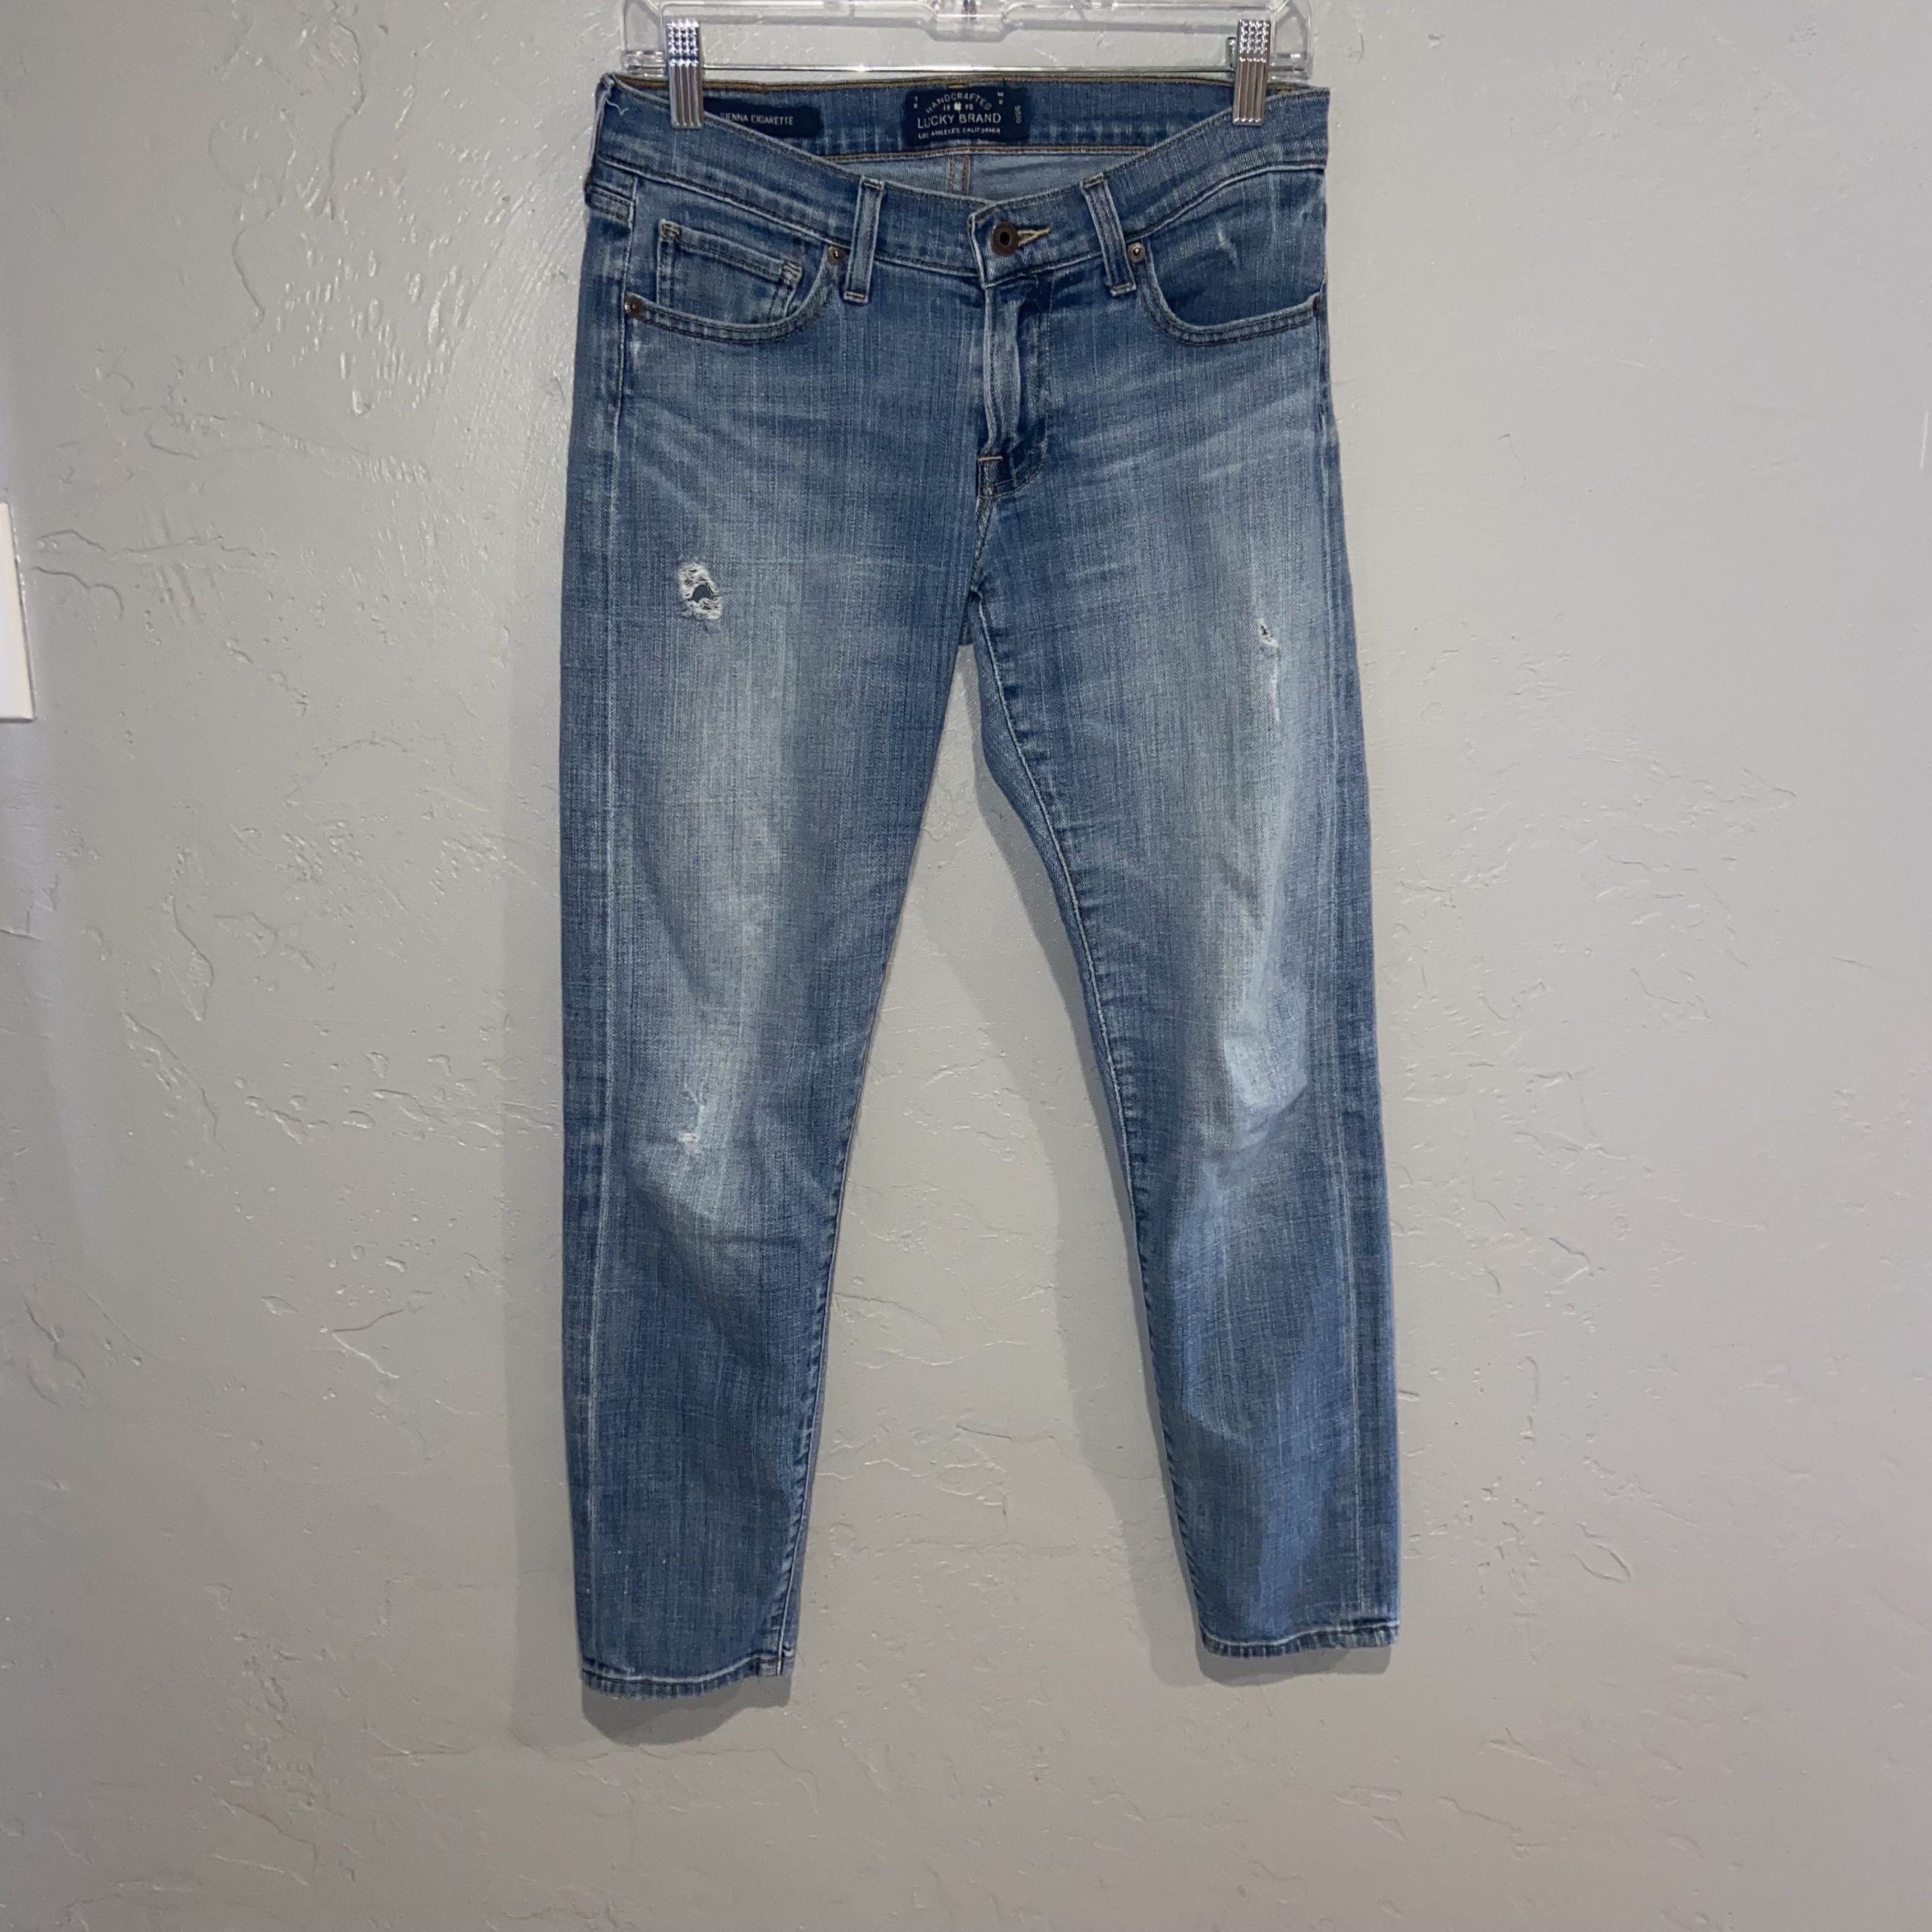 Lucky Brand Jeans - Destin Commons